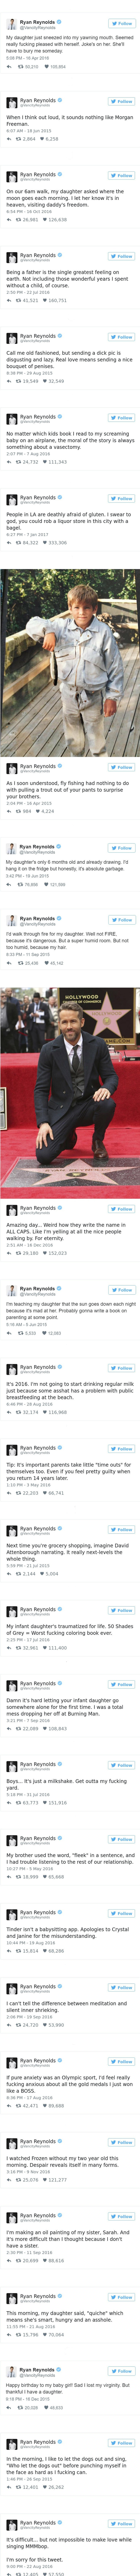 funny Ryan Reynolds Tweets